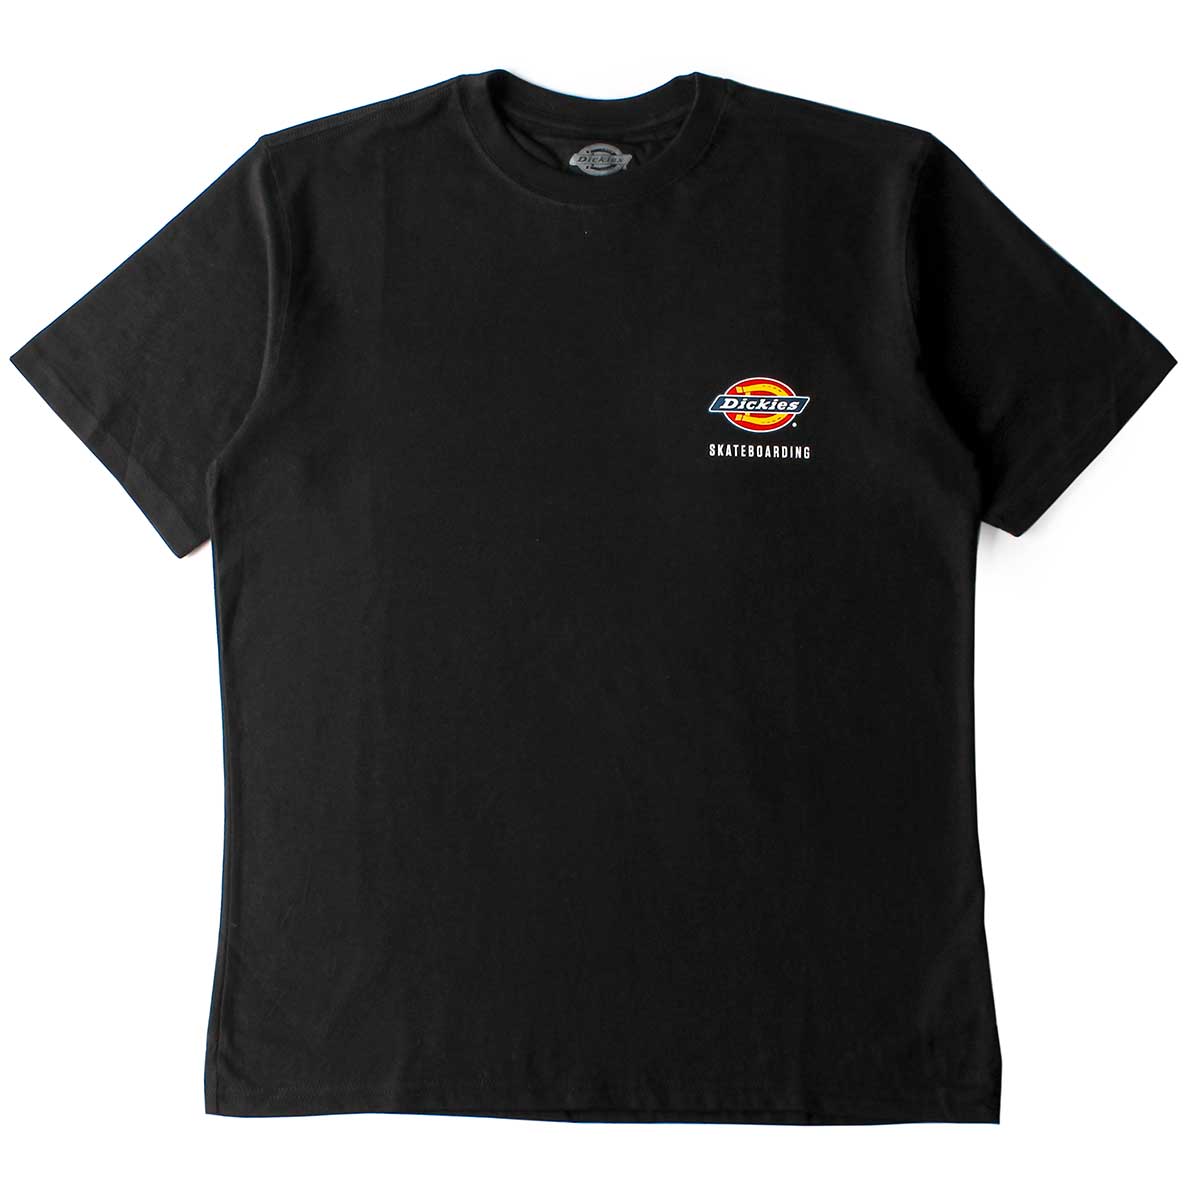 https://socalskateshop.com/mm5/graphics/00000001/35/Dickies_Skate_Logo_Shirt_Black_F.jpg